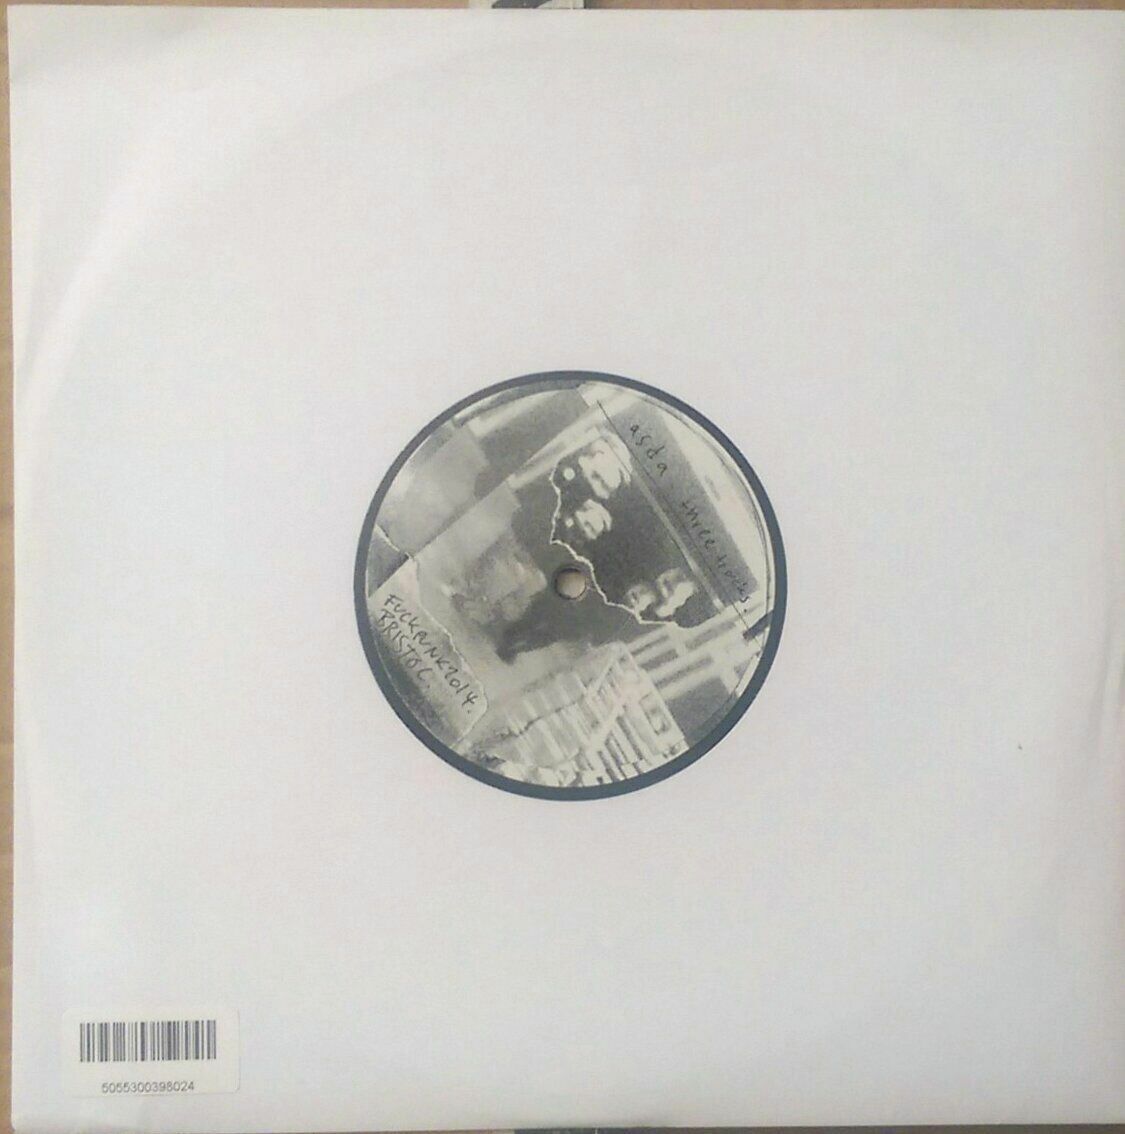 Asda - Three Tracks (Vinyl) RePress